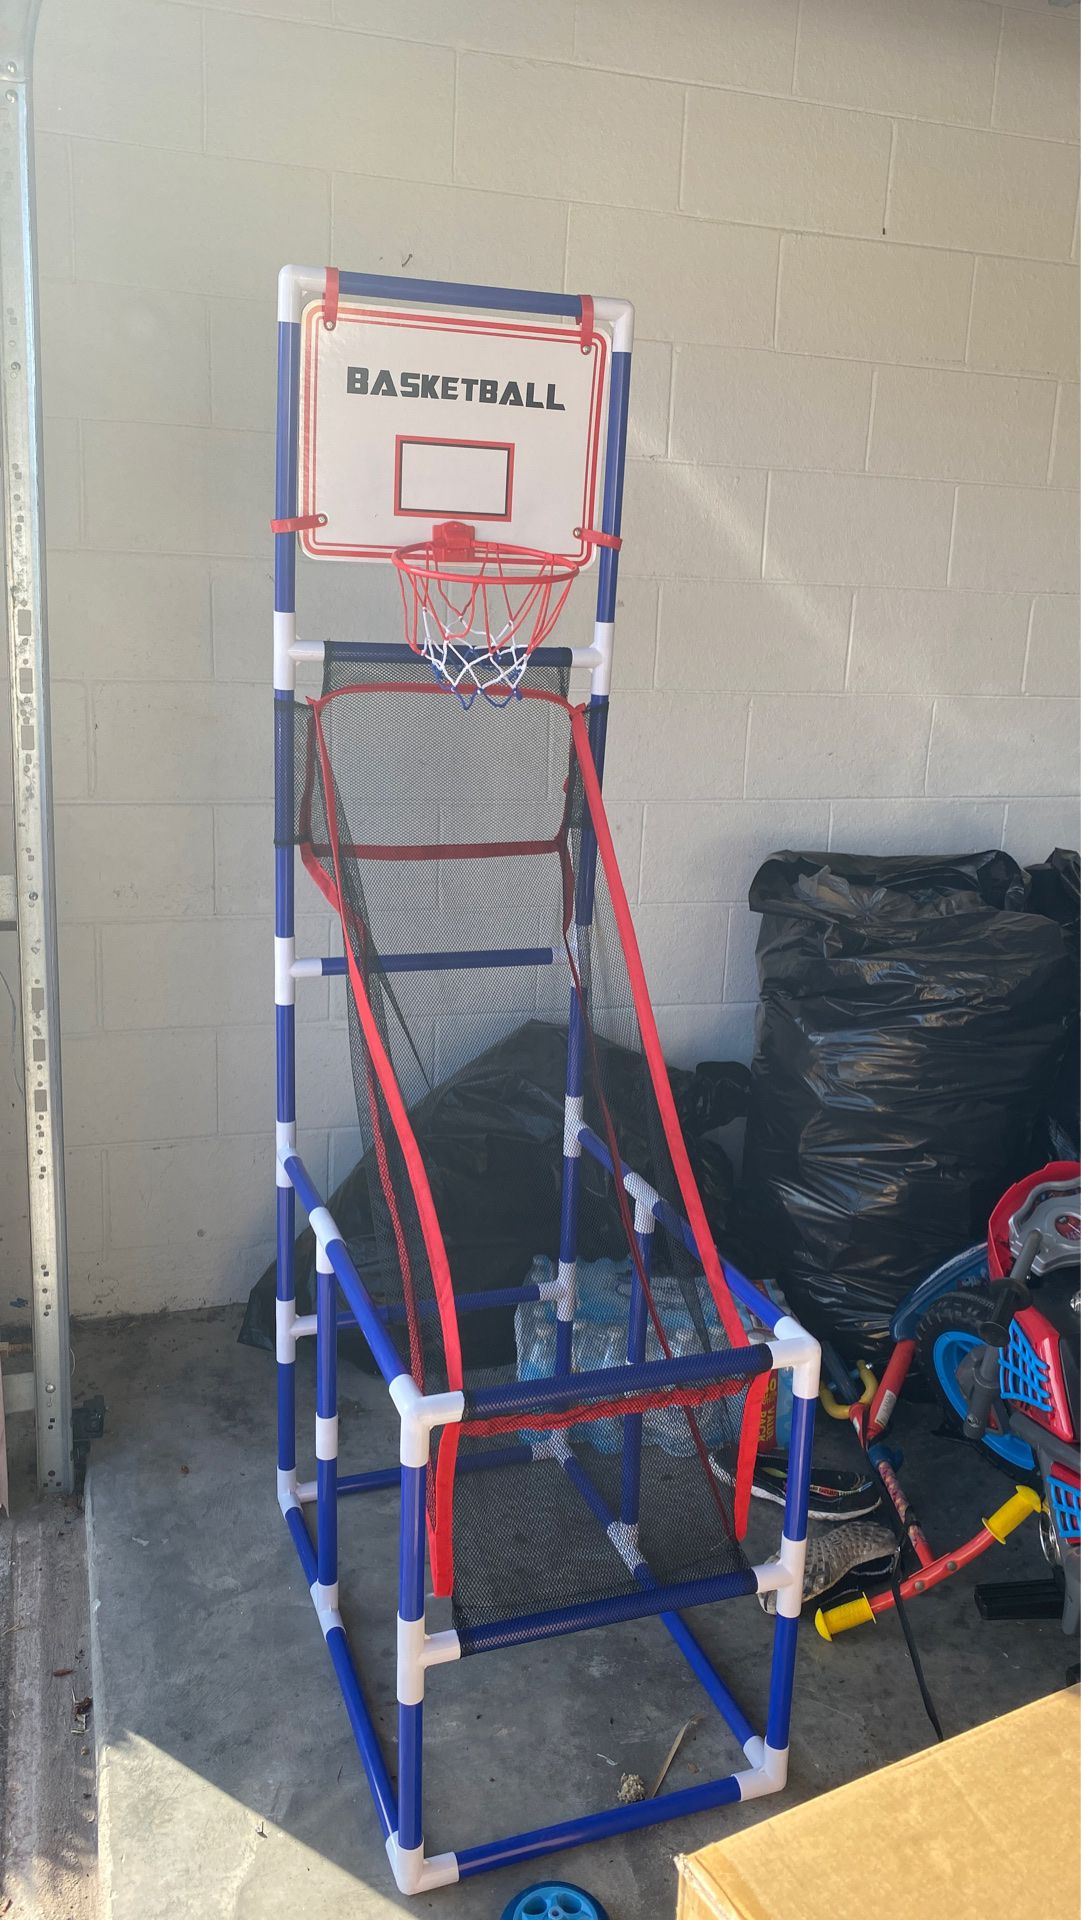 Basketball hoop toy